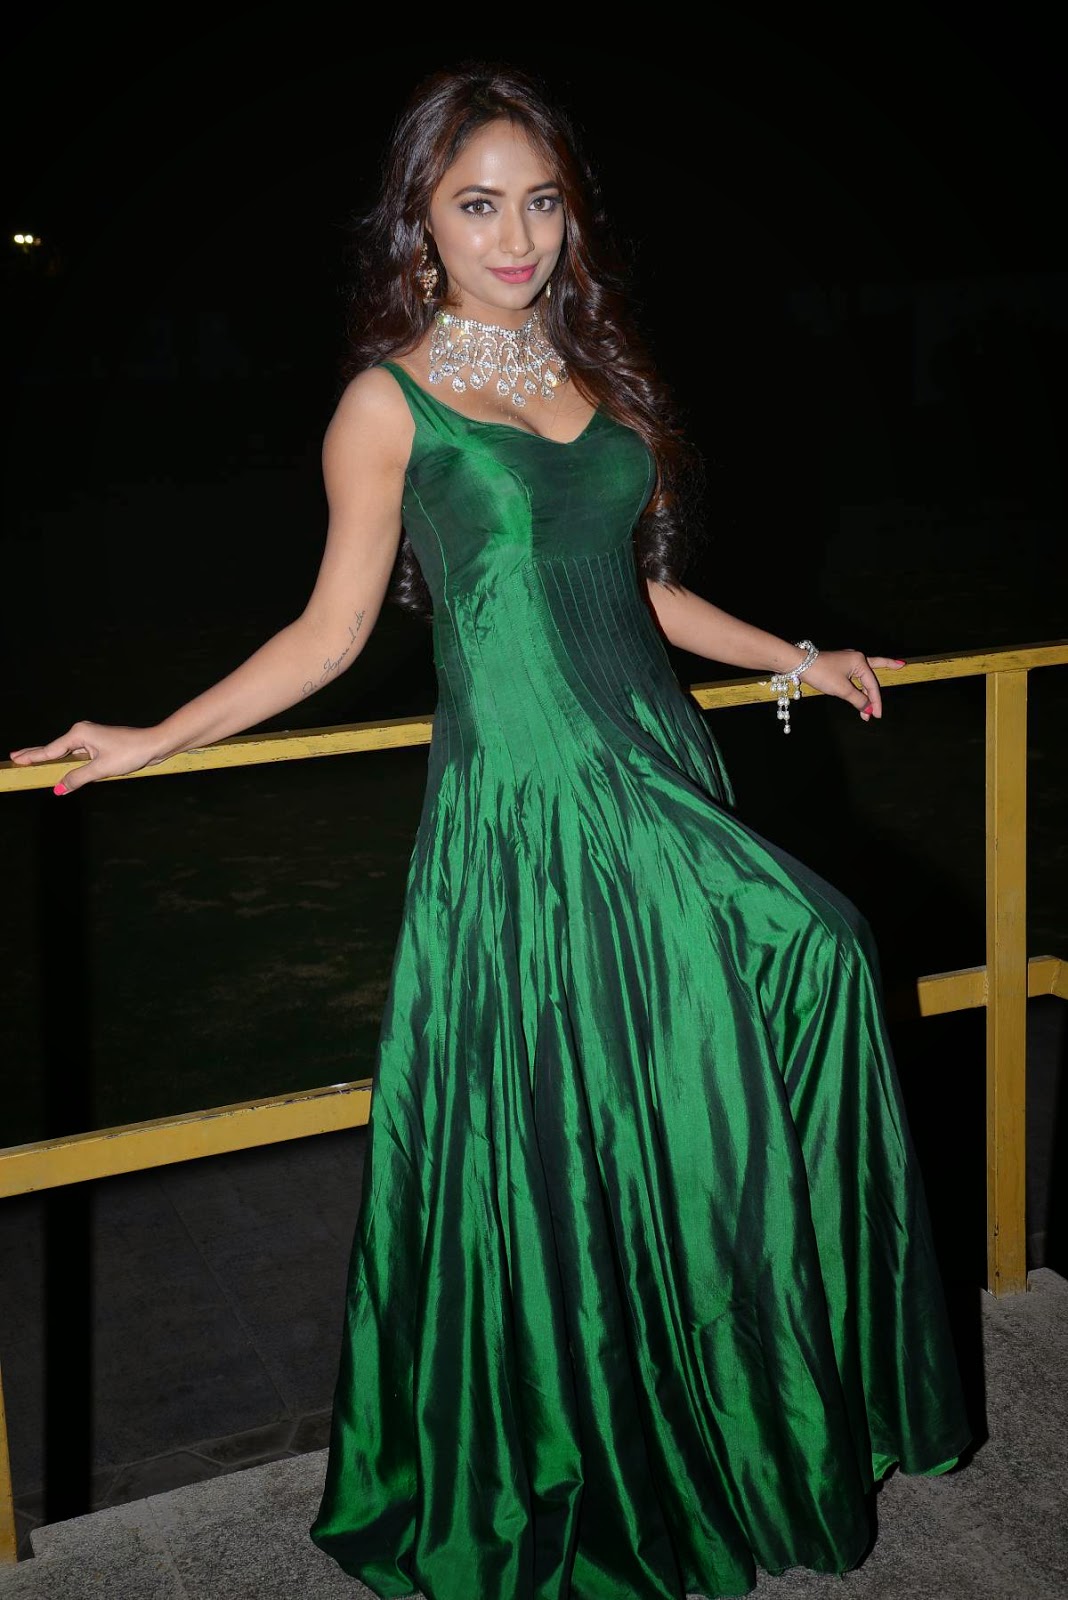 Sex Of Heroine Pranitha Subhash - Actress Jiah Stills At Hyderabad Love Story Movie Audio Launch | Indian  Girls Villa - Celebs Beauty, Fashion and Entertainment